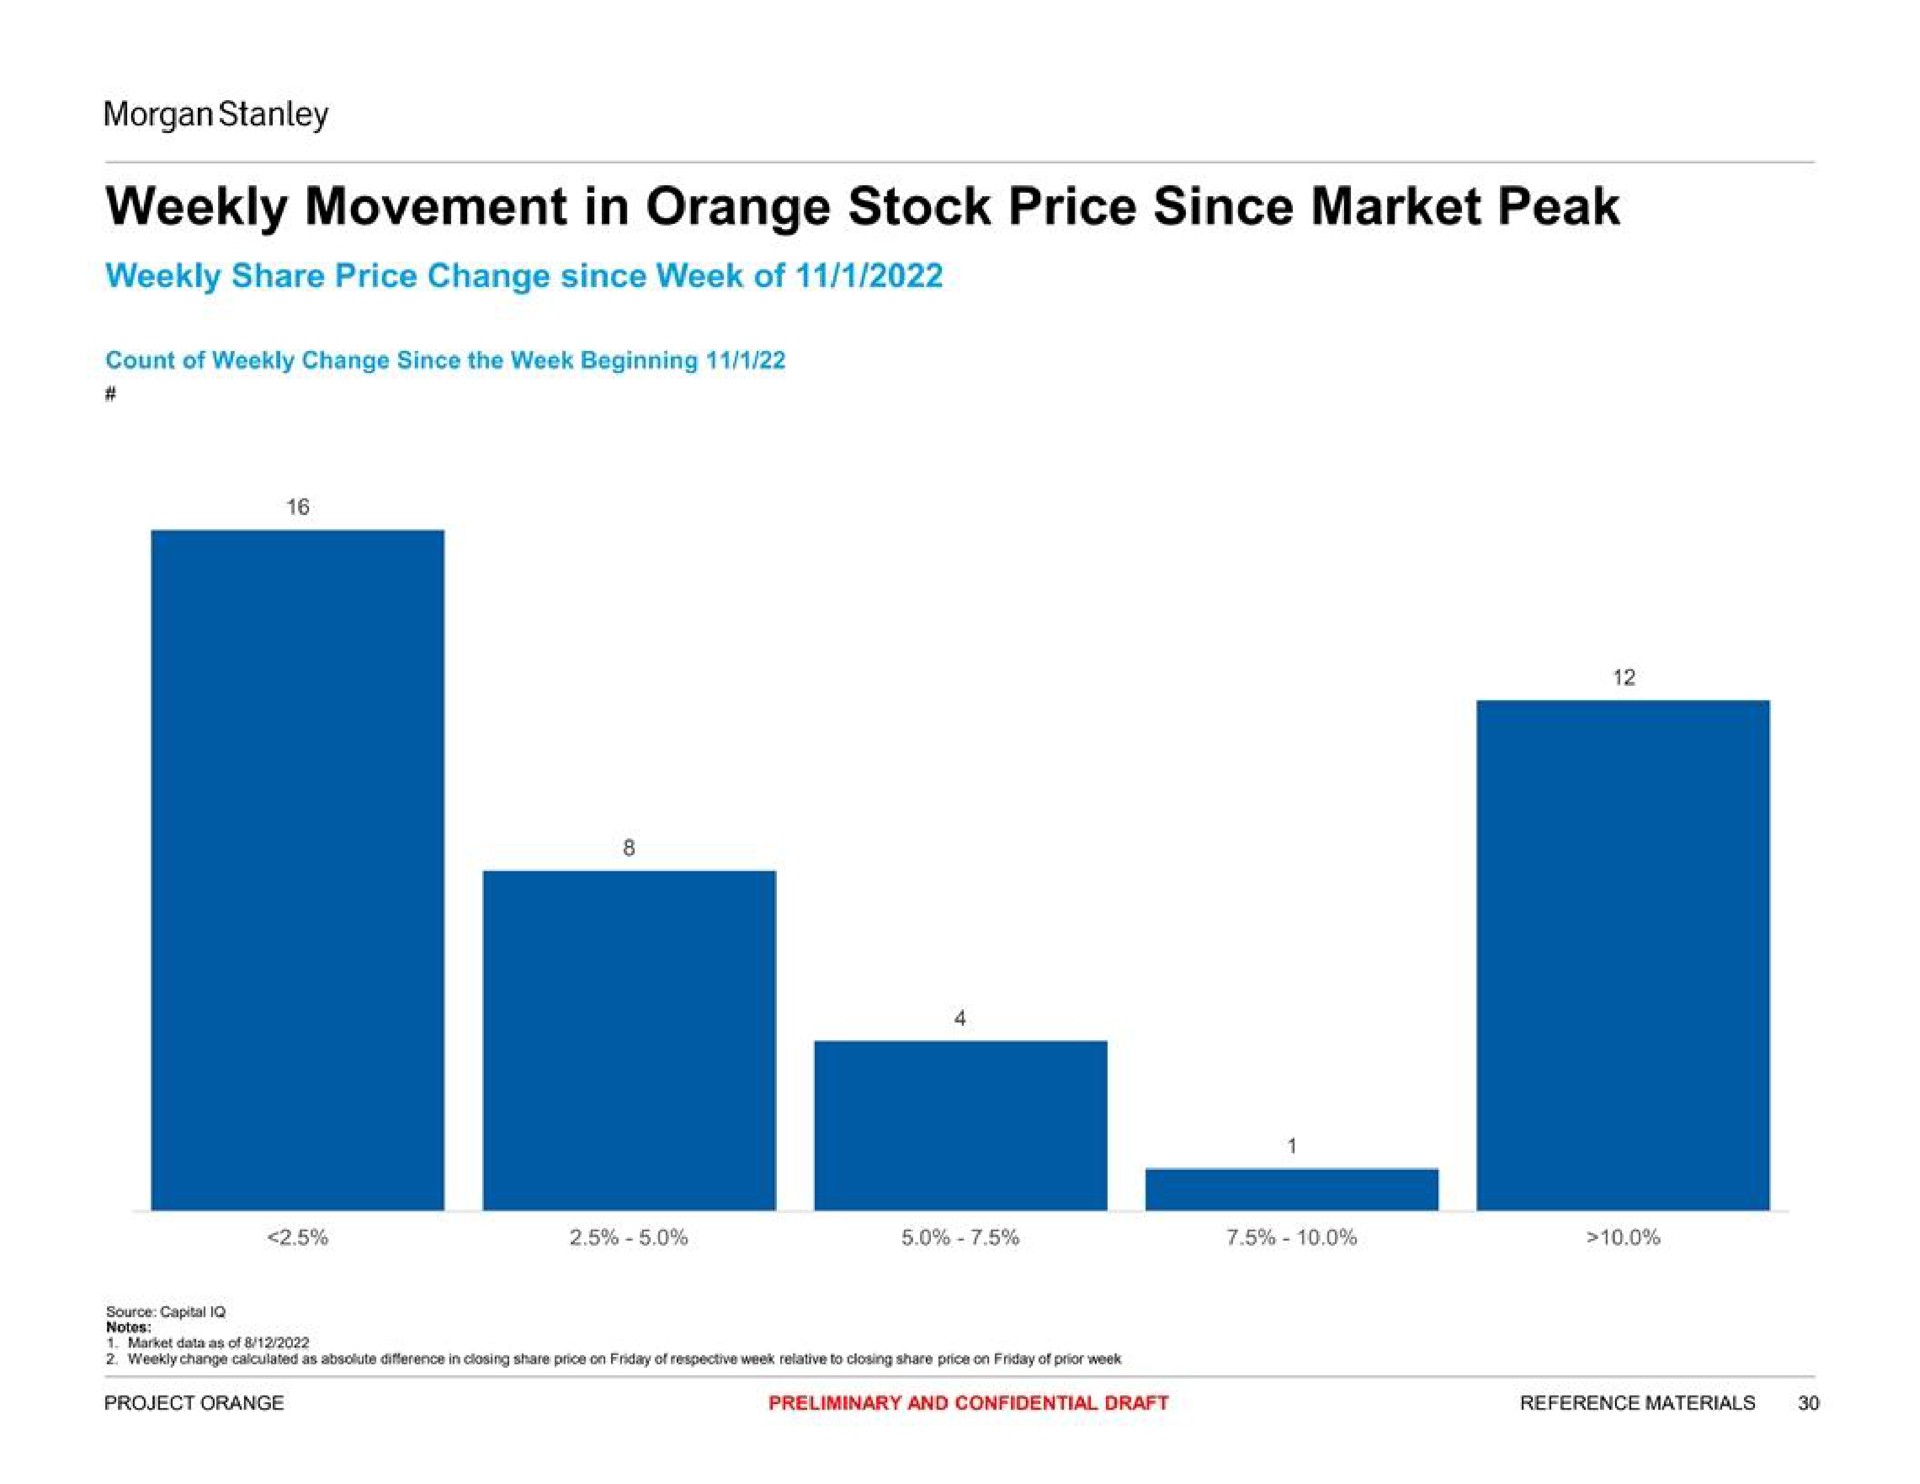 weekly movement in orange stock price since market peak | Morgan Stanley